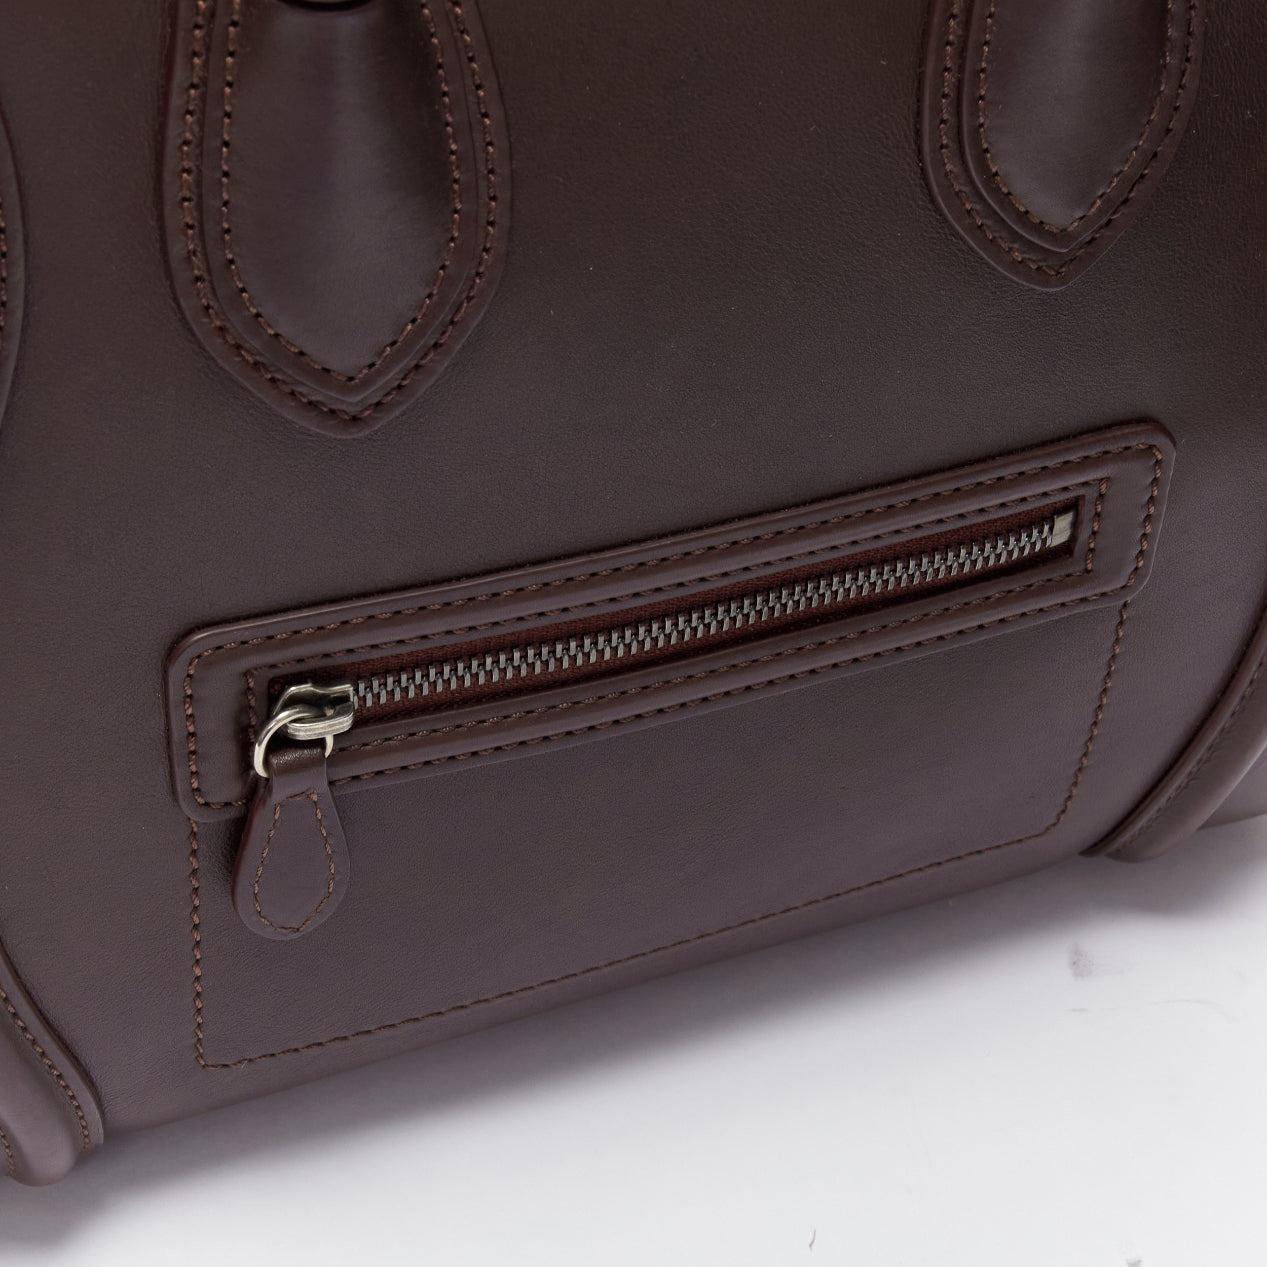 CELINE Luggage burgundy leather front zip logo shopper tote bag 4